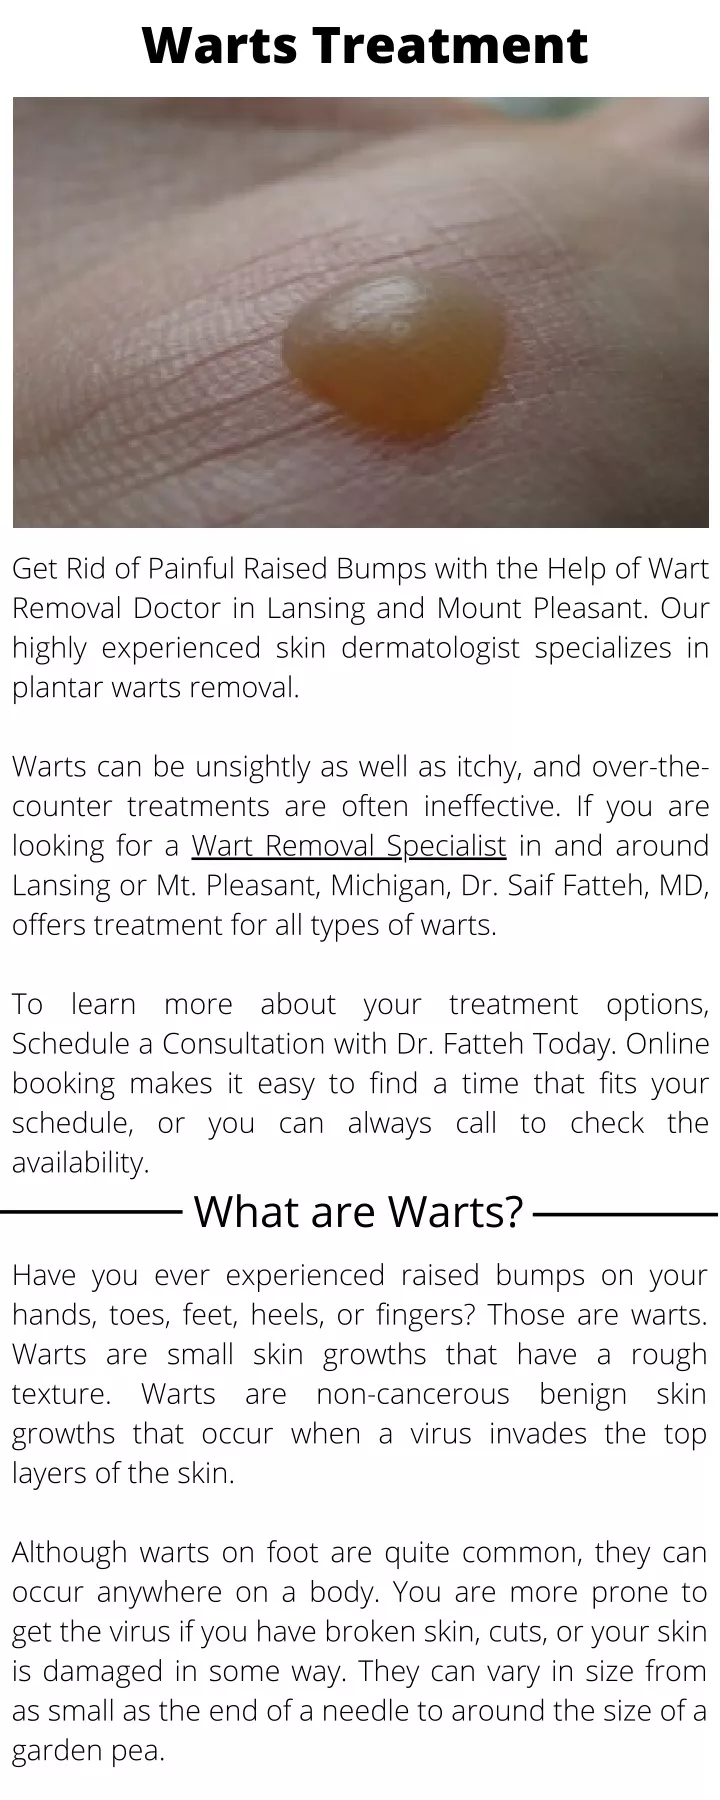 warts treatment